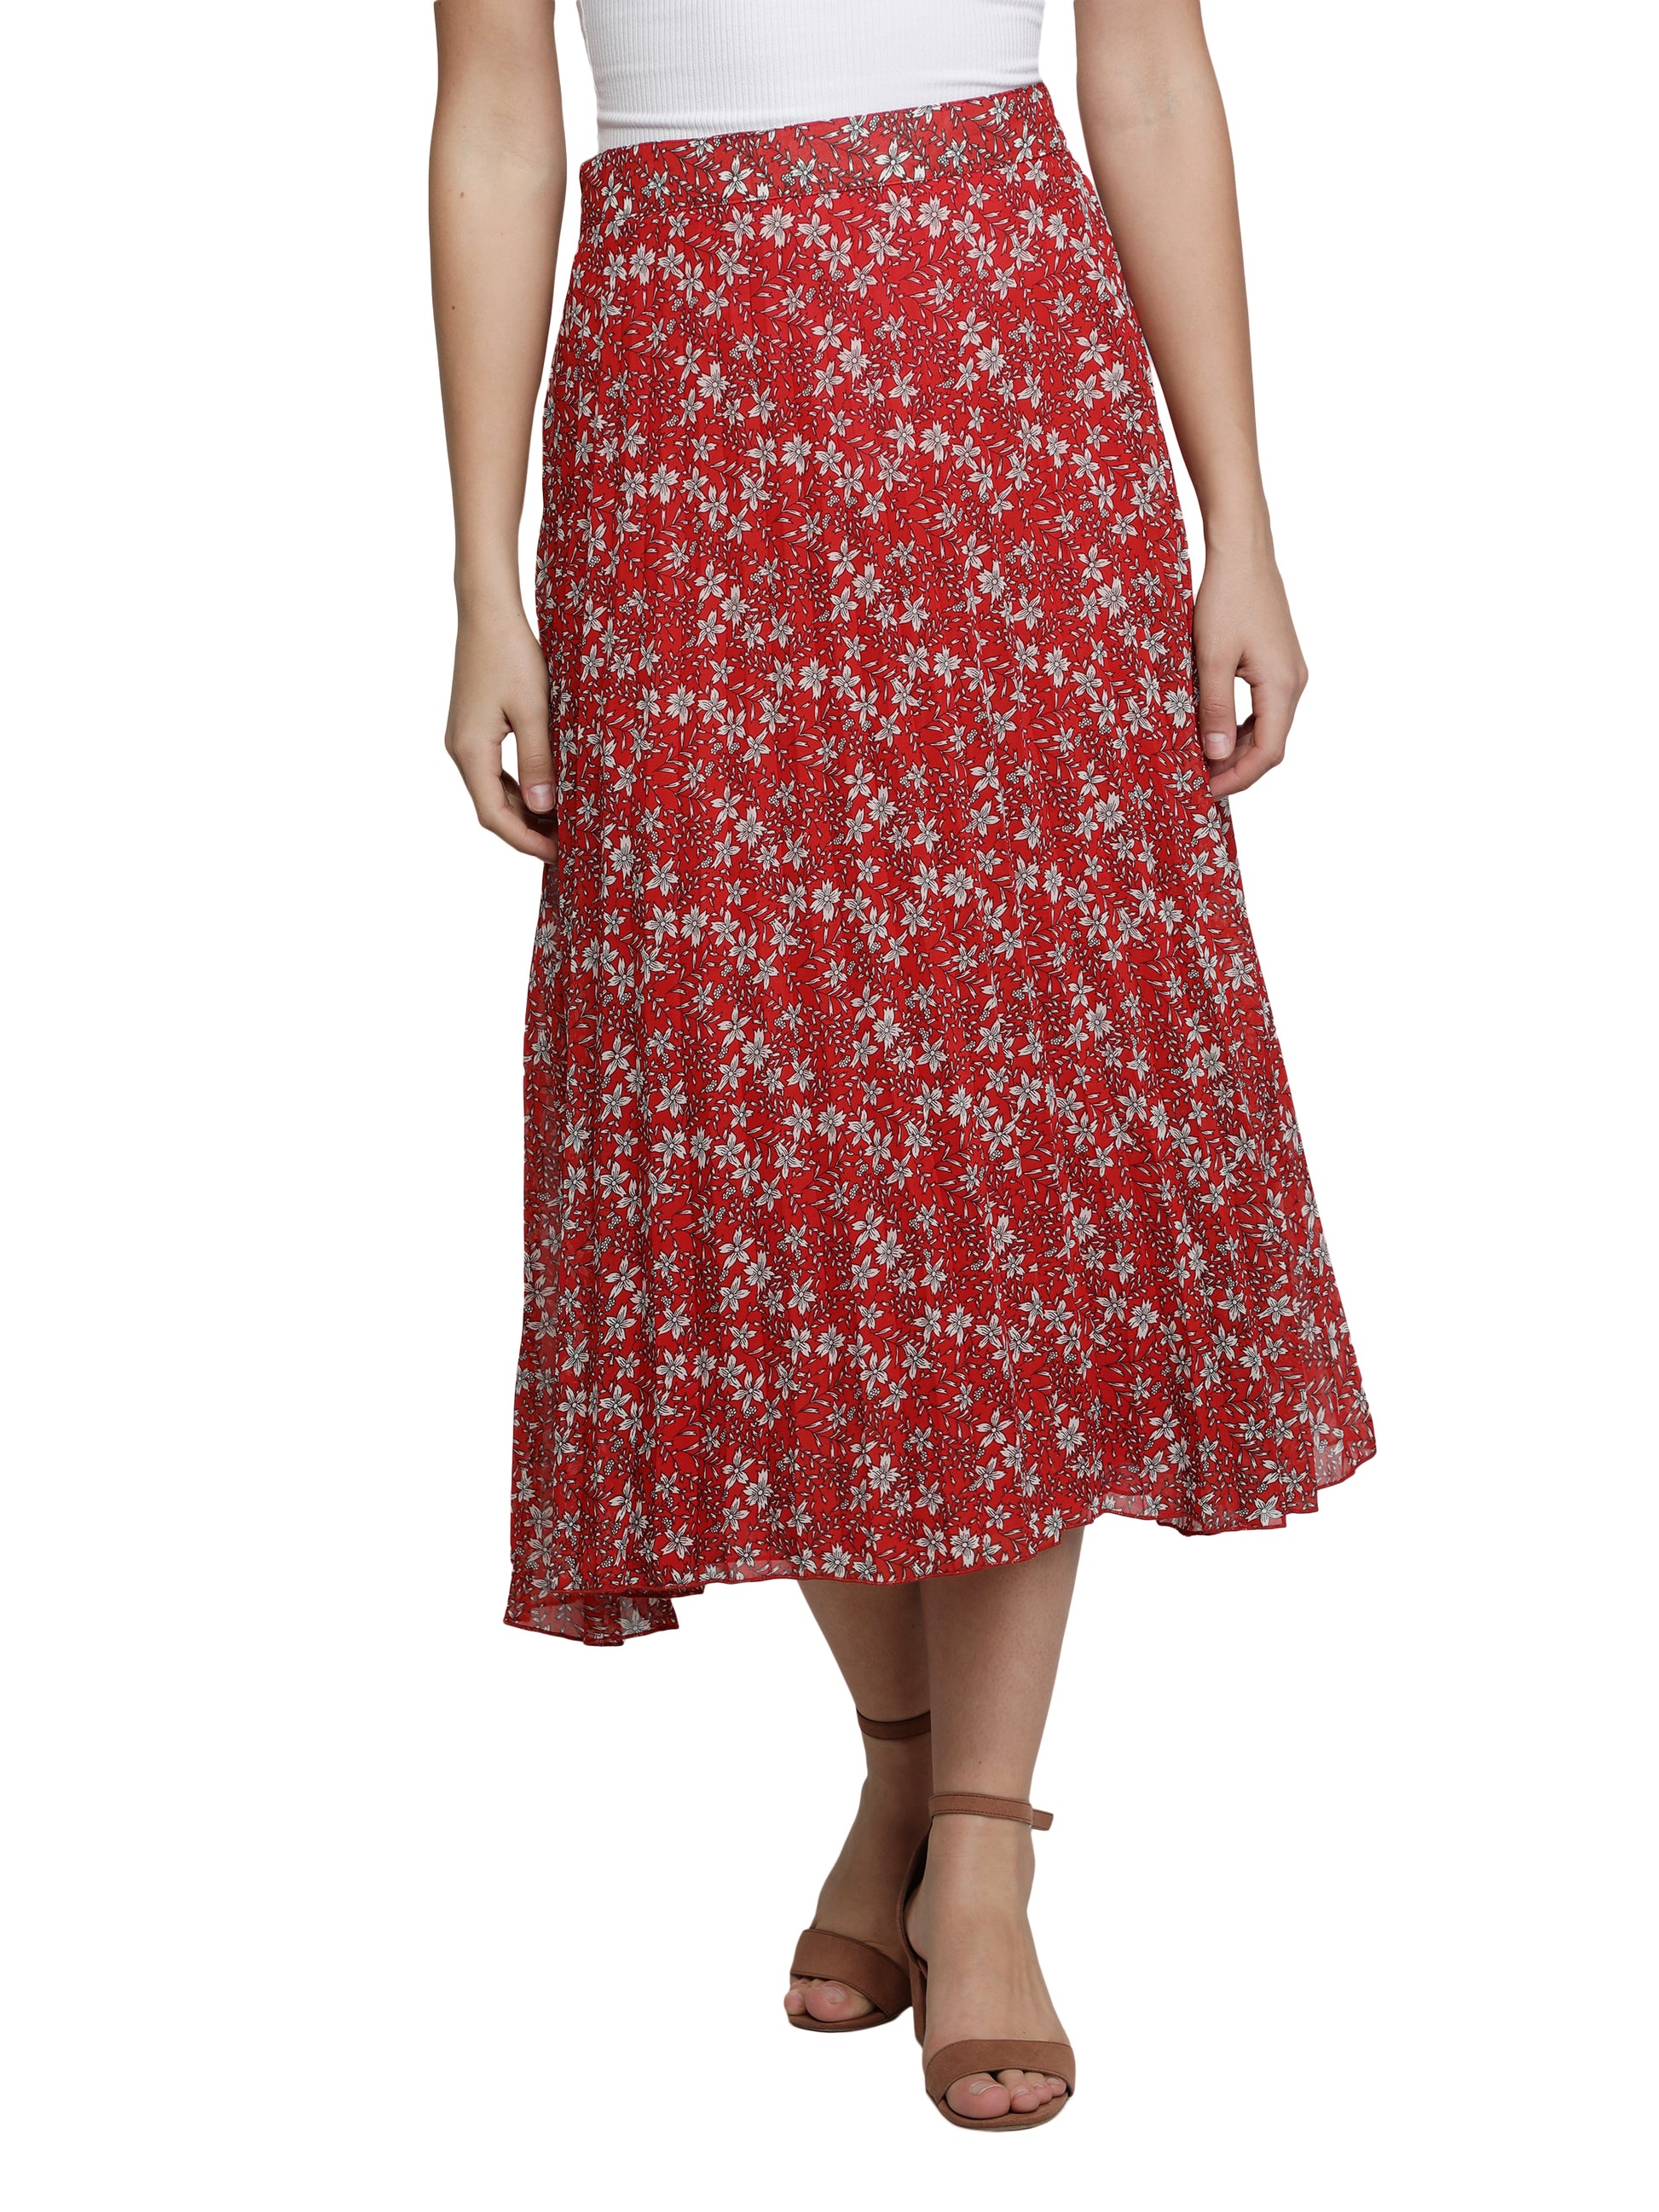 Women Floral Print Pleated Red Skirt freeshipping - NUEVOSDAMAS